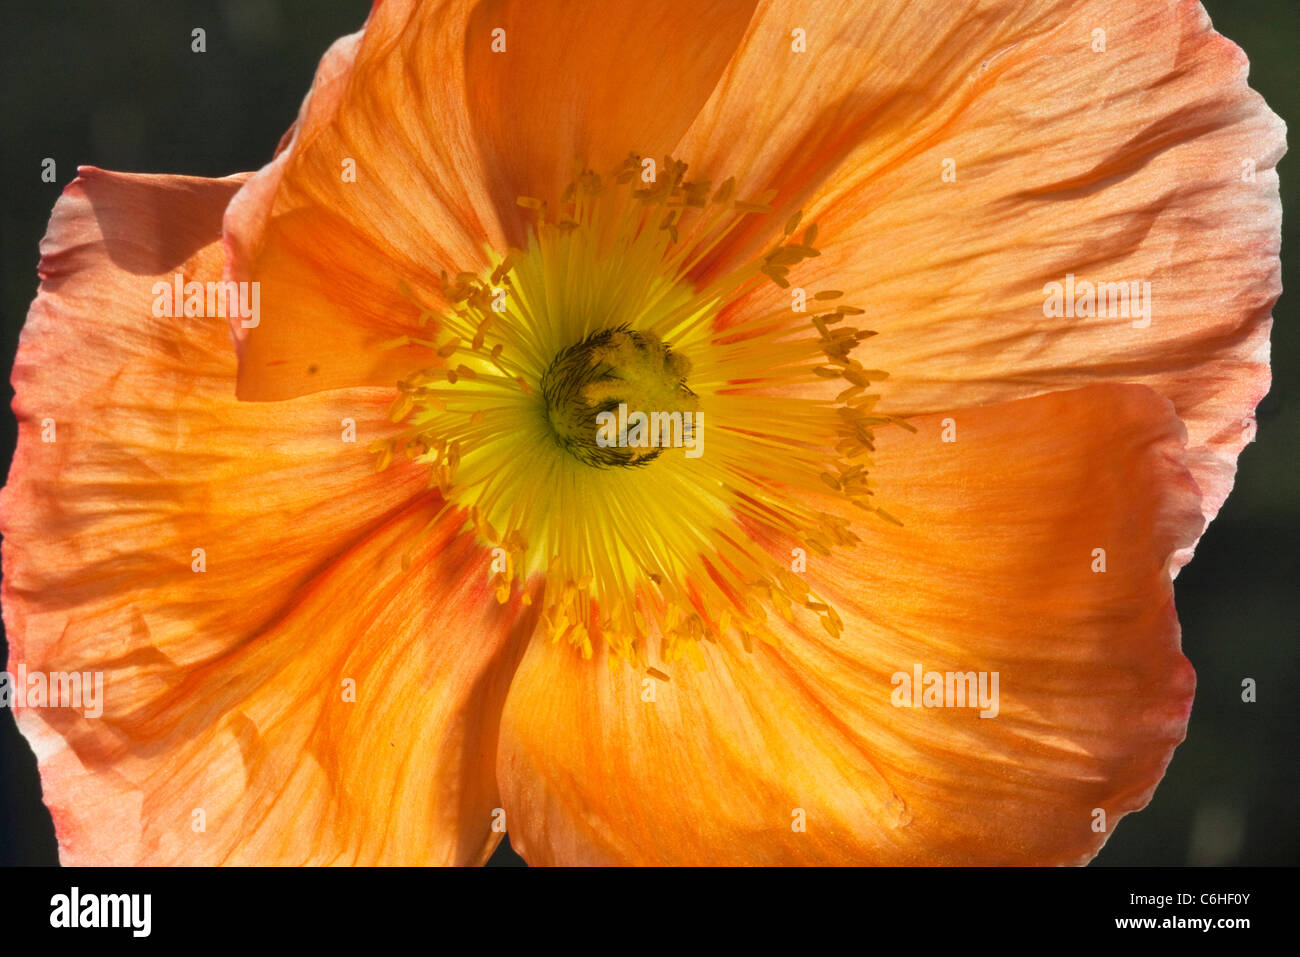 Translucent petals of an orange poppy flower Stock Photo